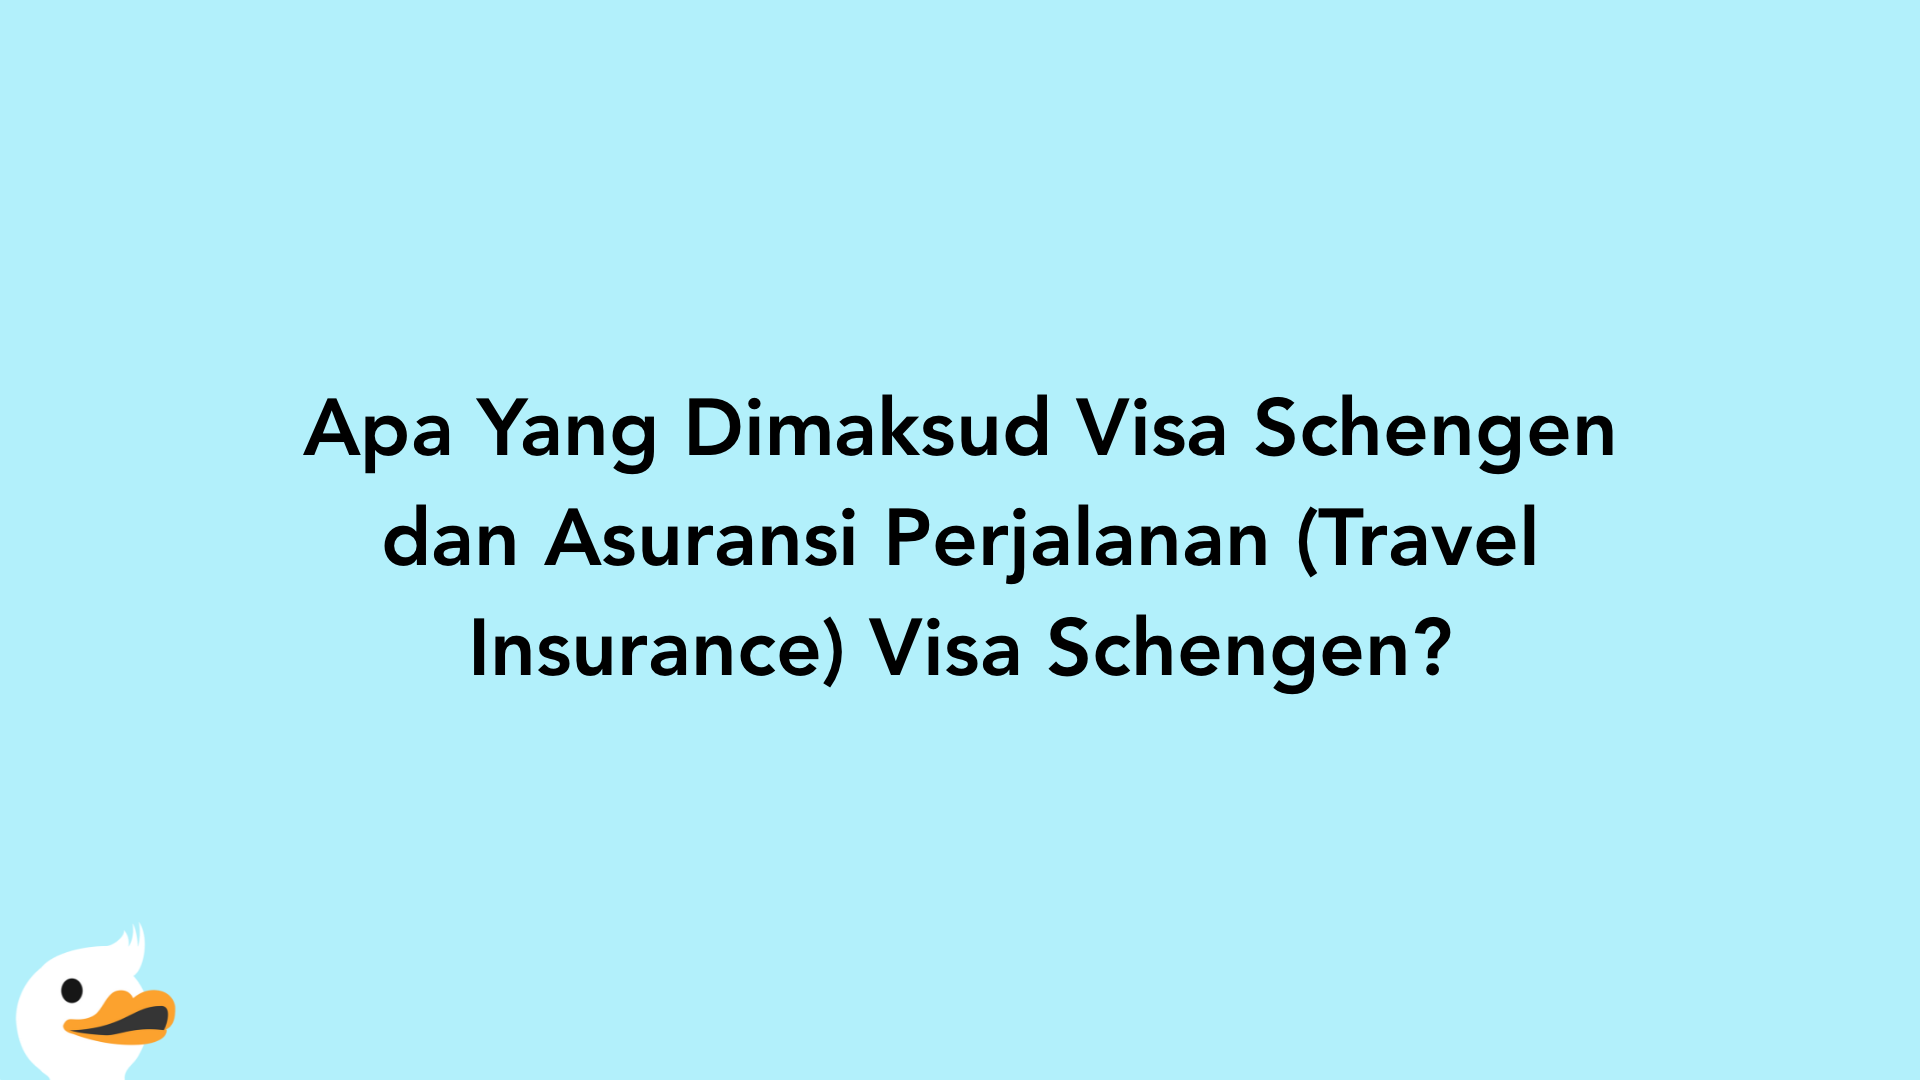 Apa Yang Dimaksud Visa Schengen dan Asuransi Perjalanan (Travel Insurance) Visa Schengen?